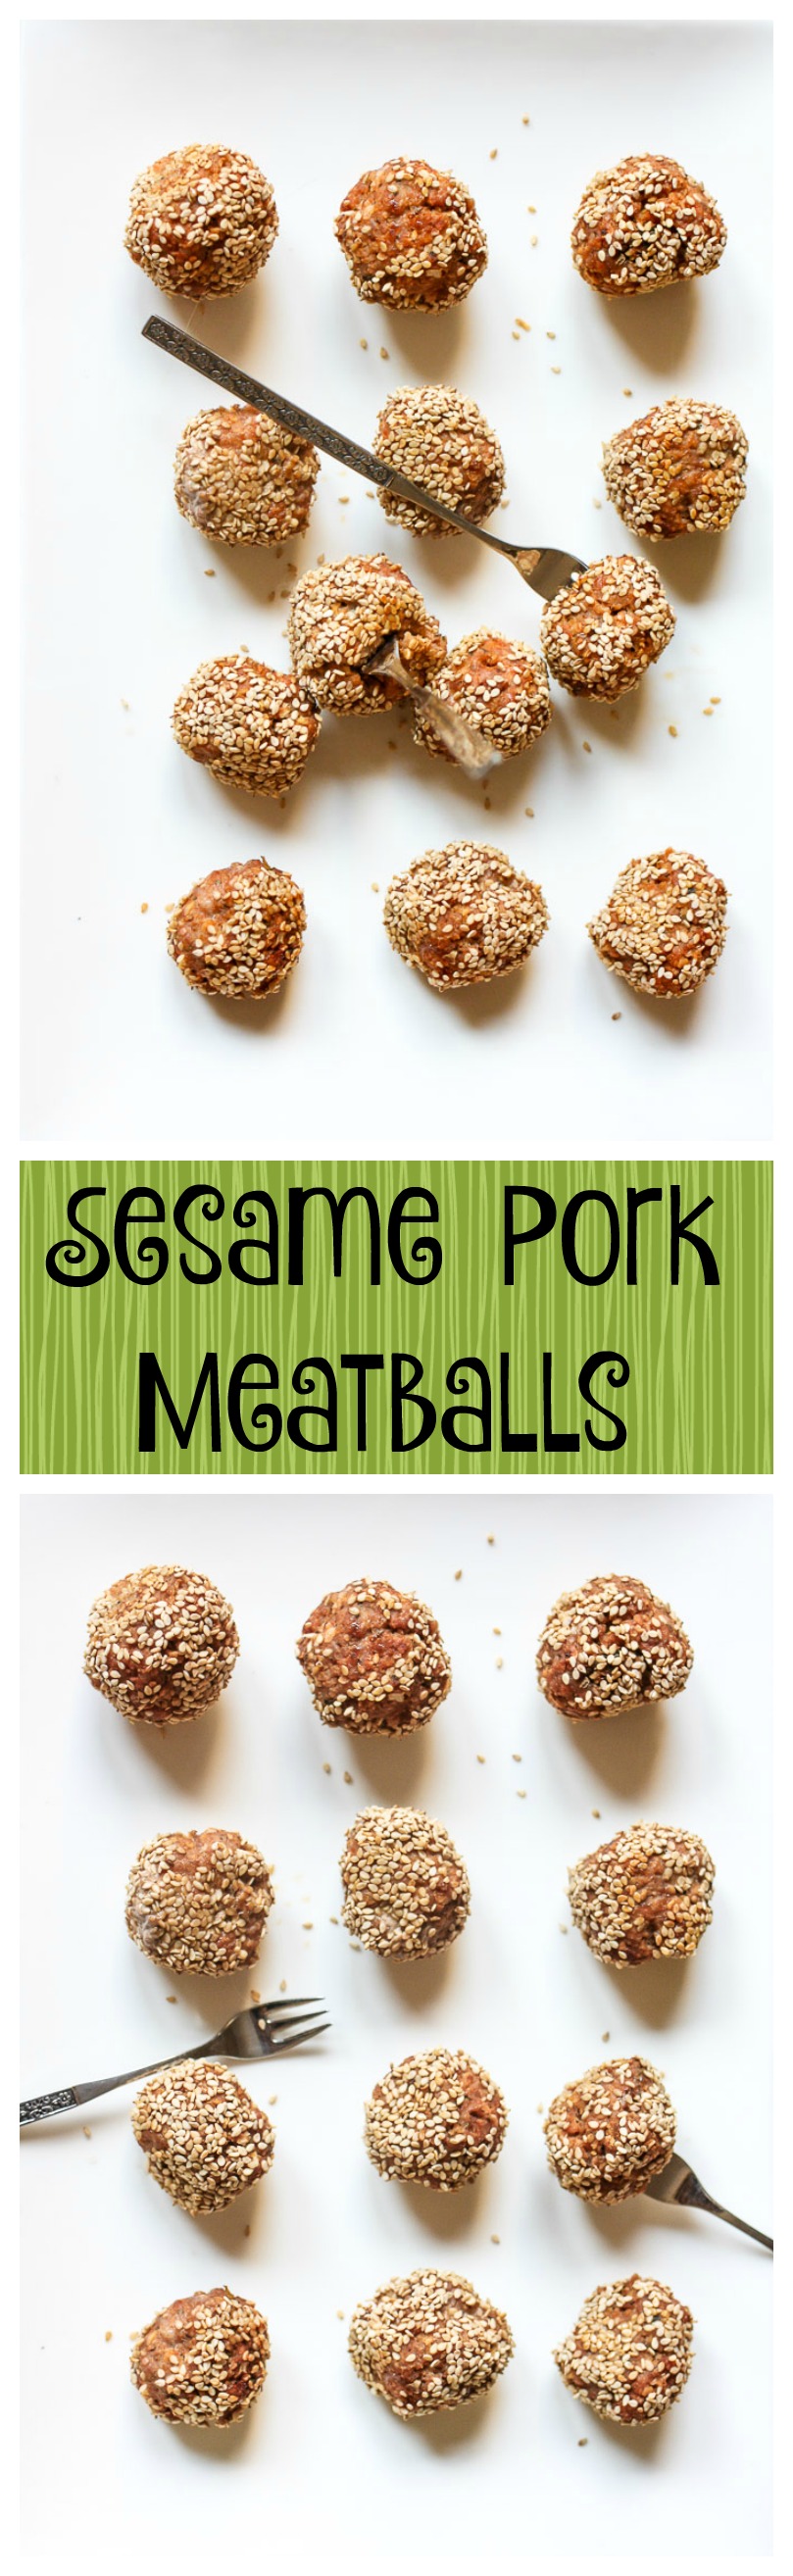 sesame pork meatballs